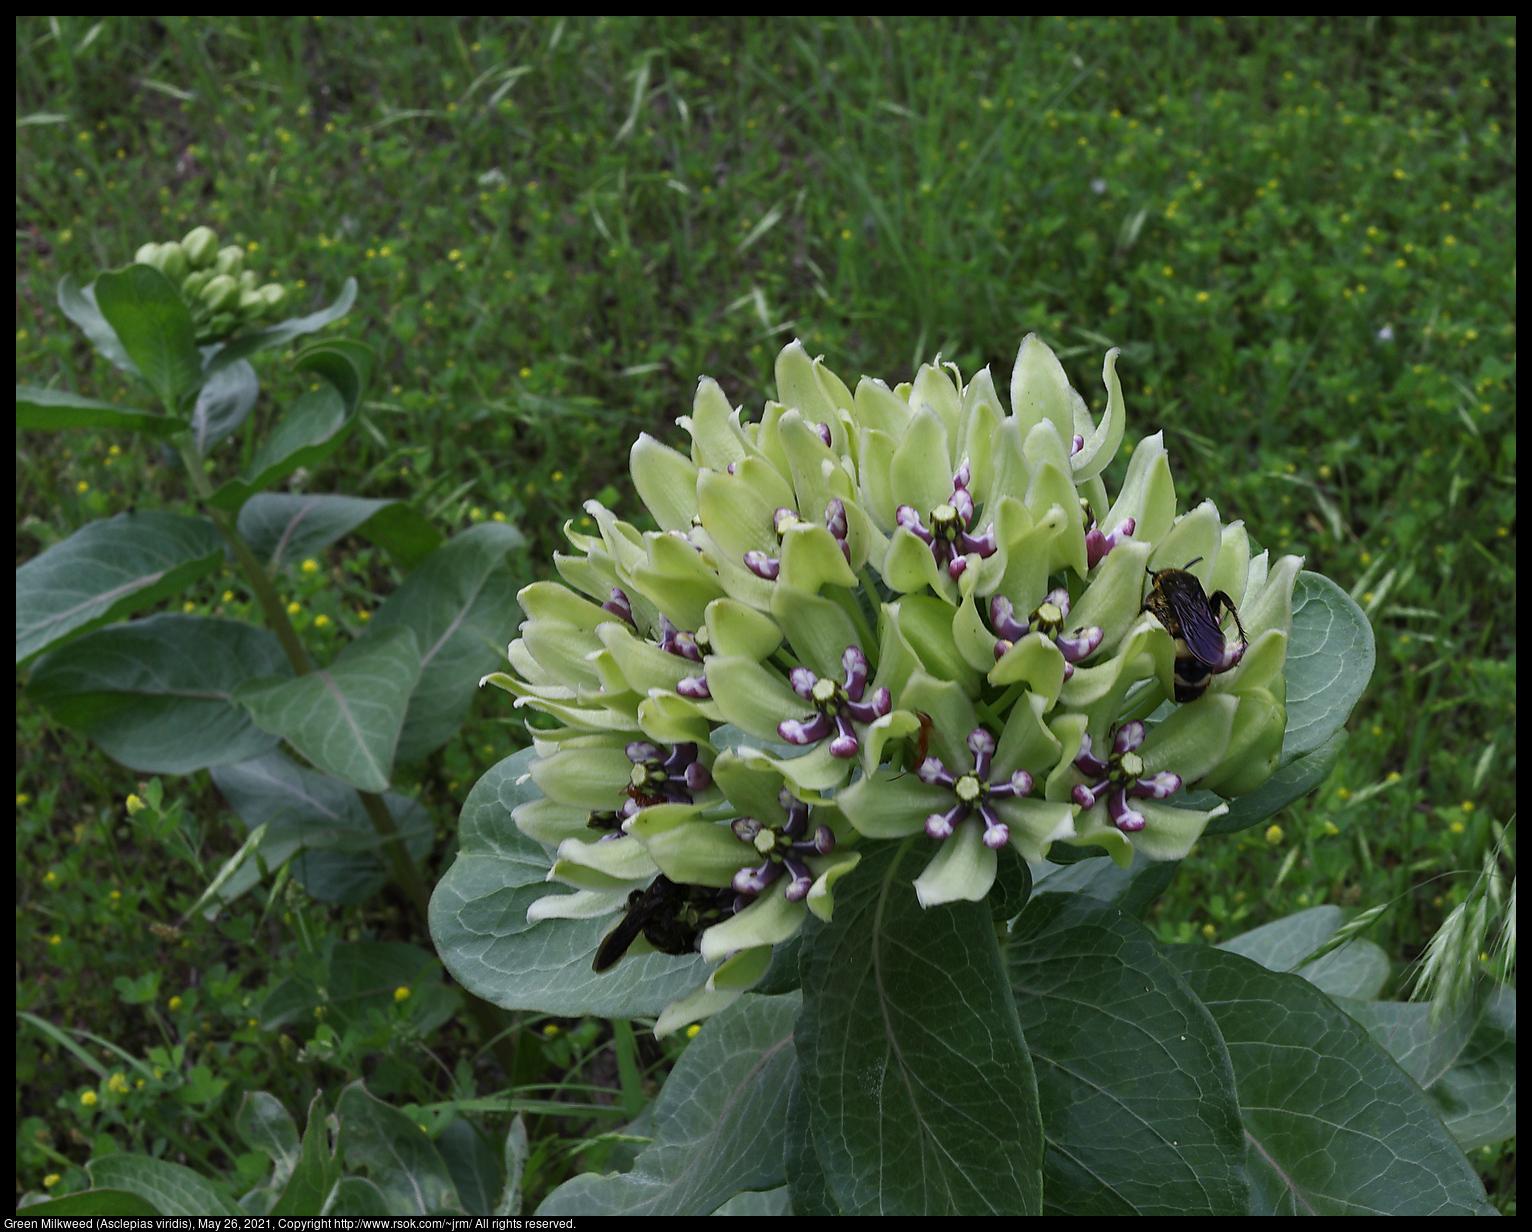 Green Milkweed (Asclepias viridis), May 26, 2021